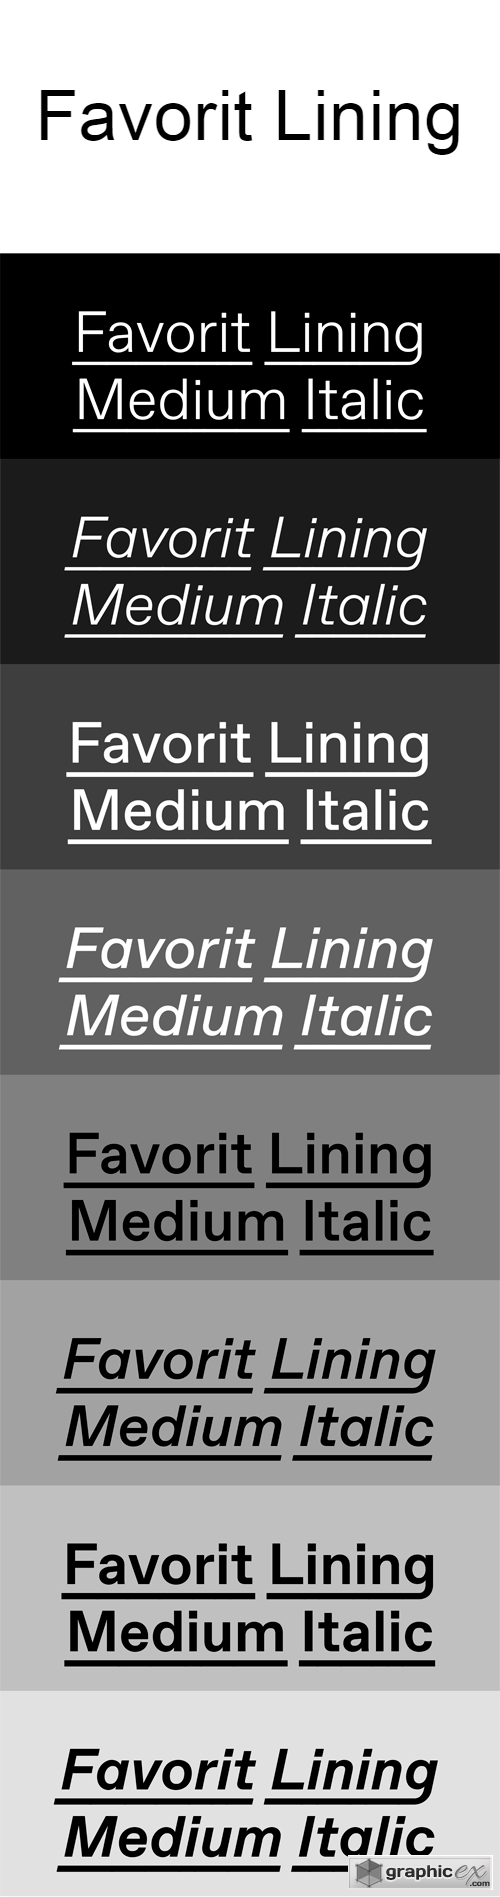 Favorit Lining Font Family